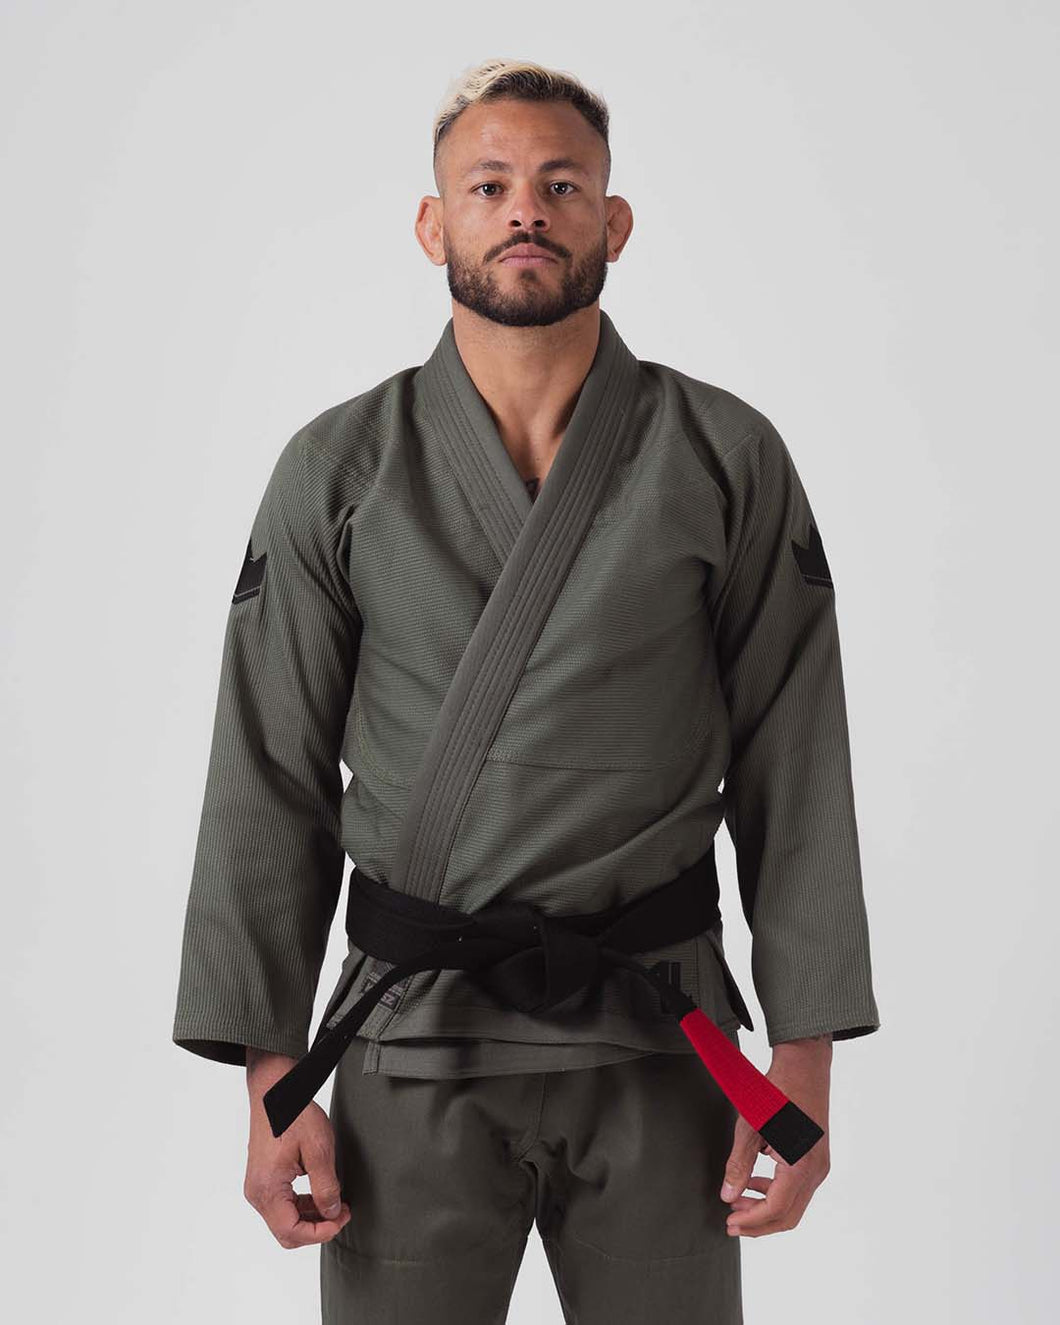 Kimono BJJ (GI) Kingz The One- Military Green- White belt included